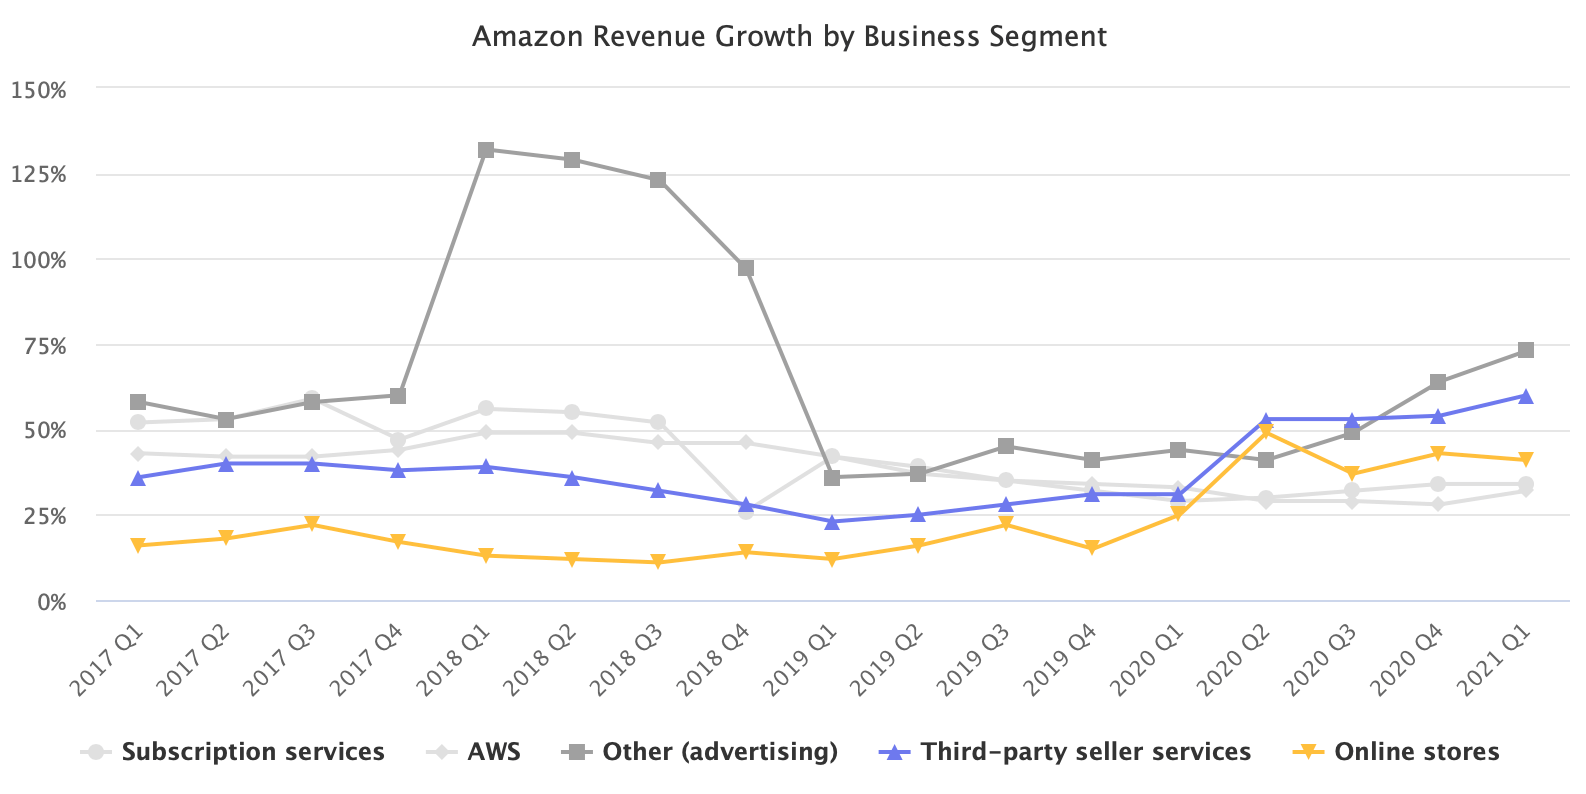 Amazon Revenue Growth by Business Segment